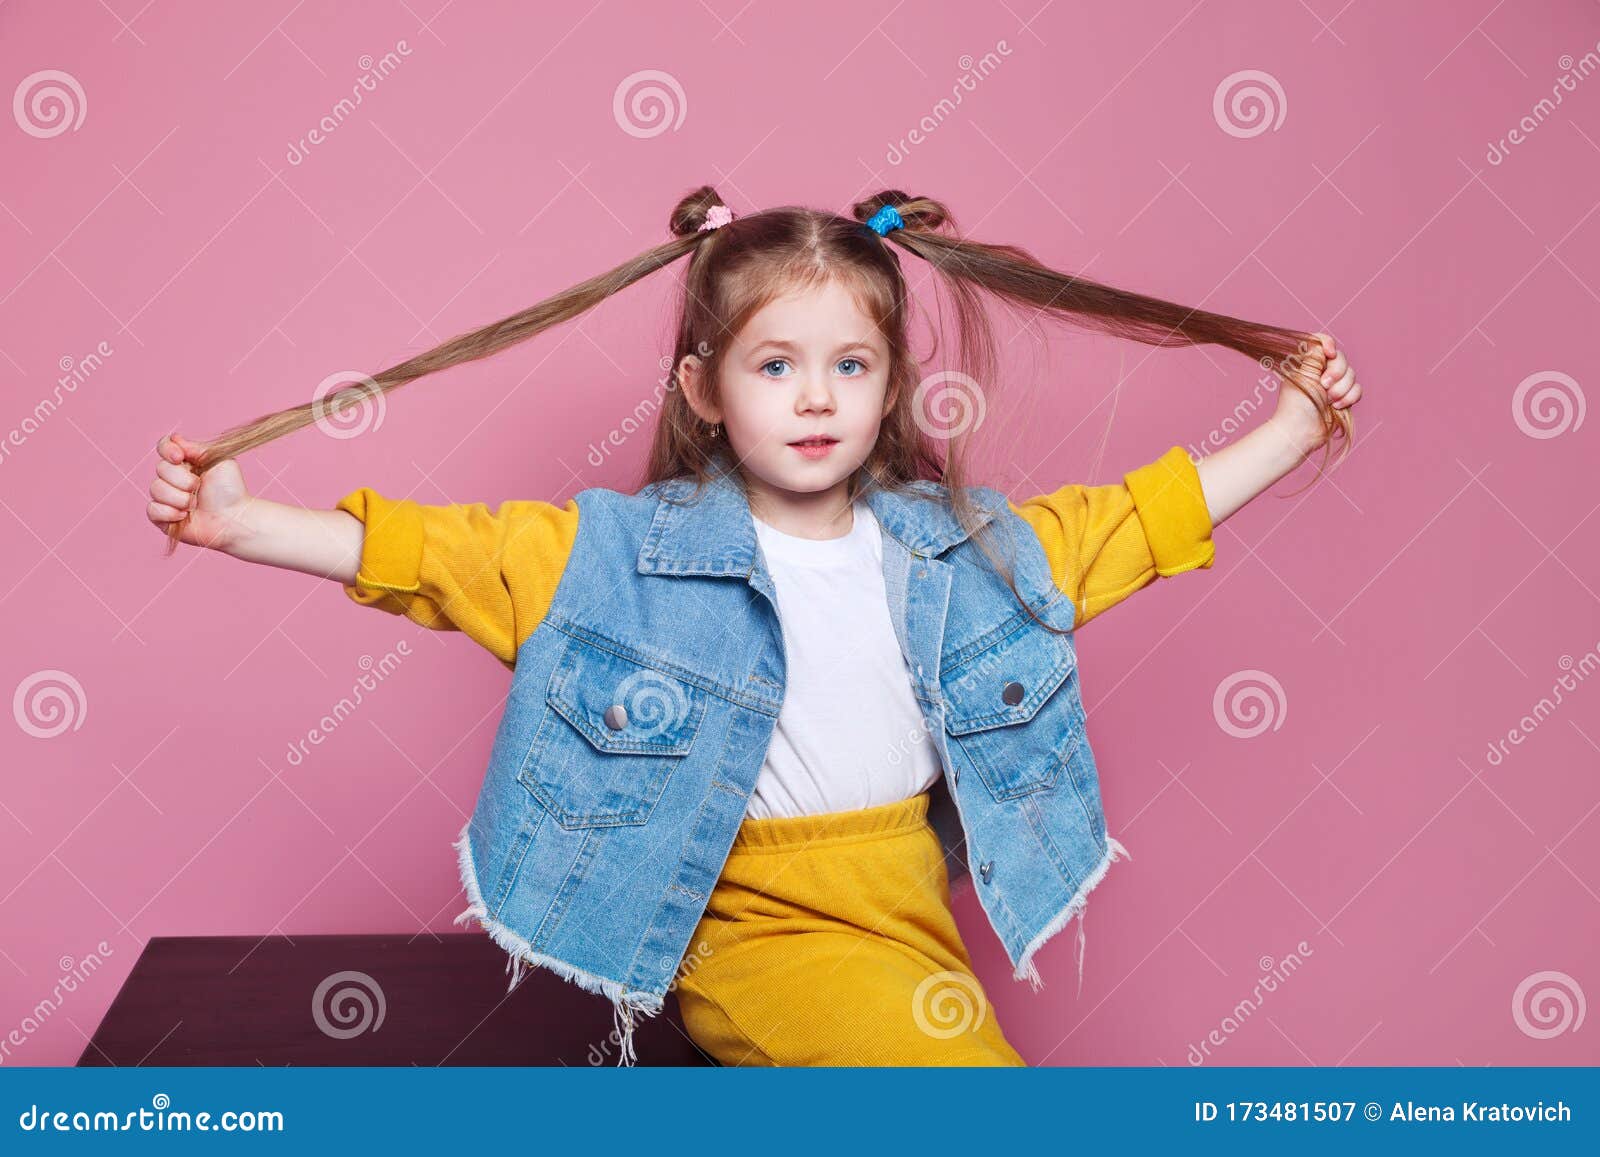 Little Girl Pulling Up Her Shirt